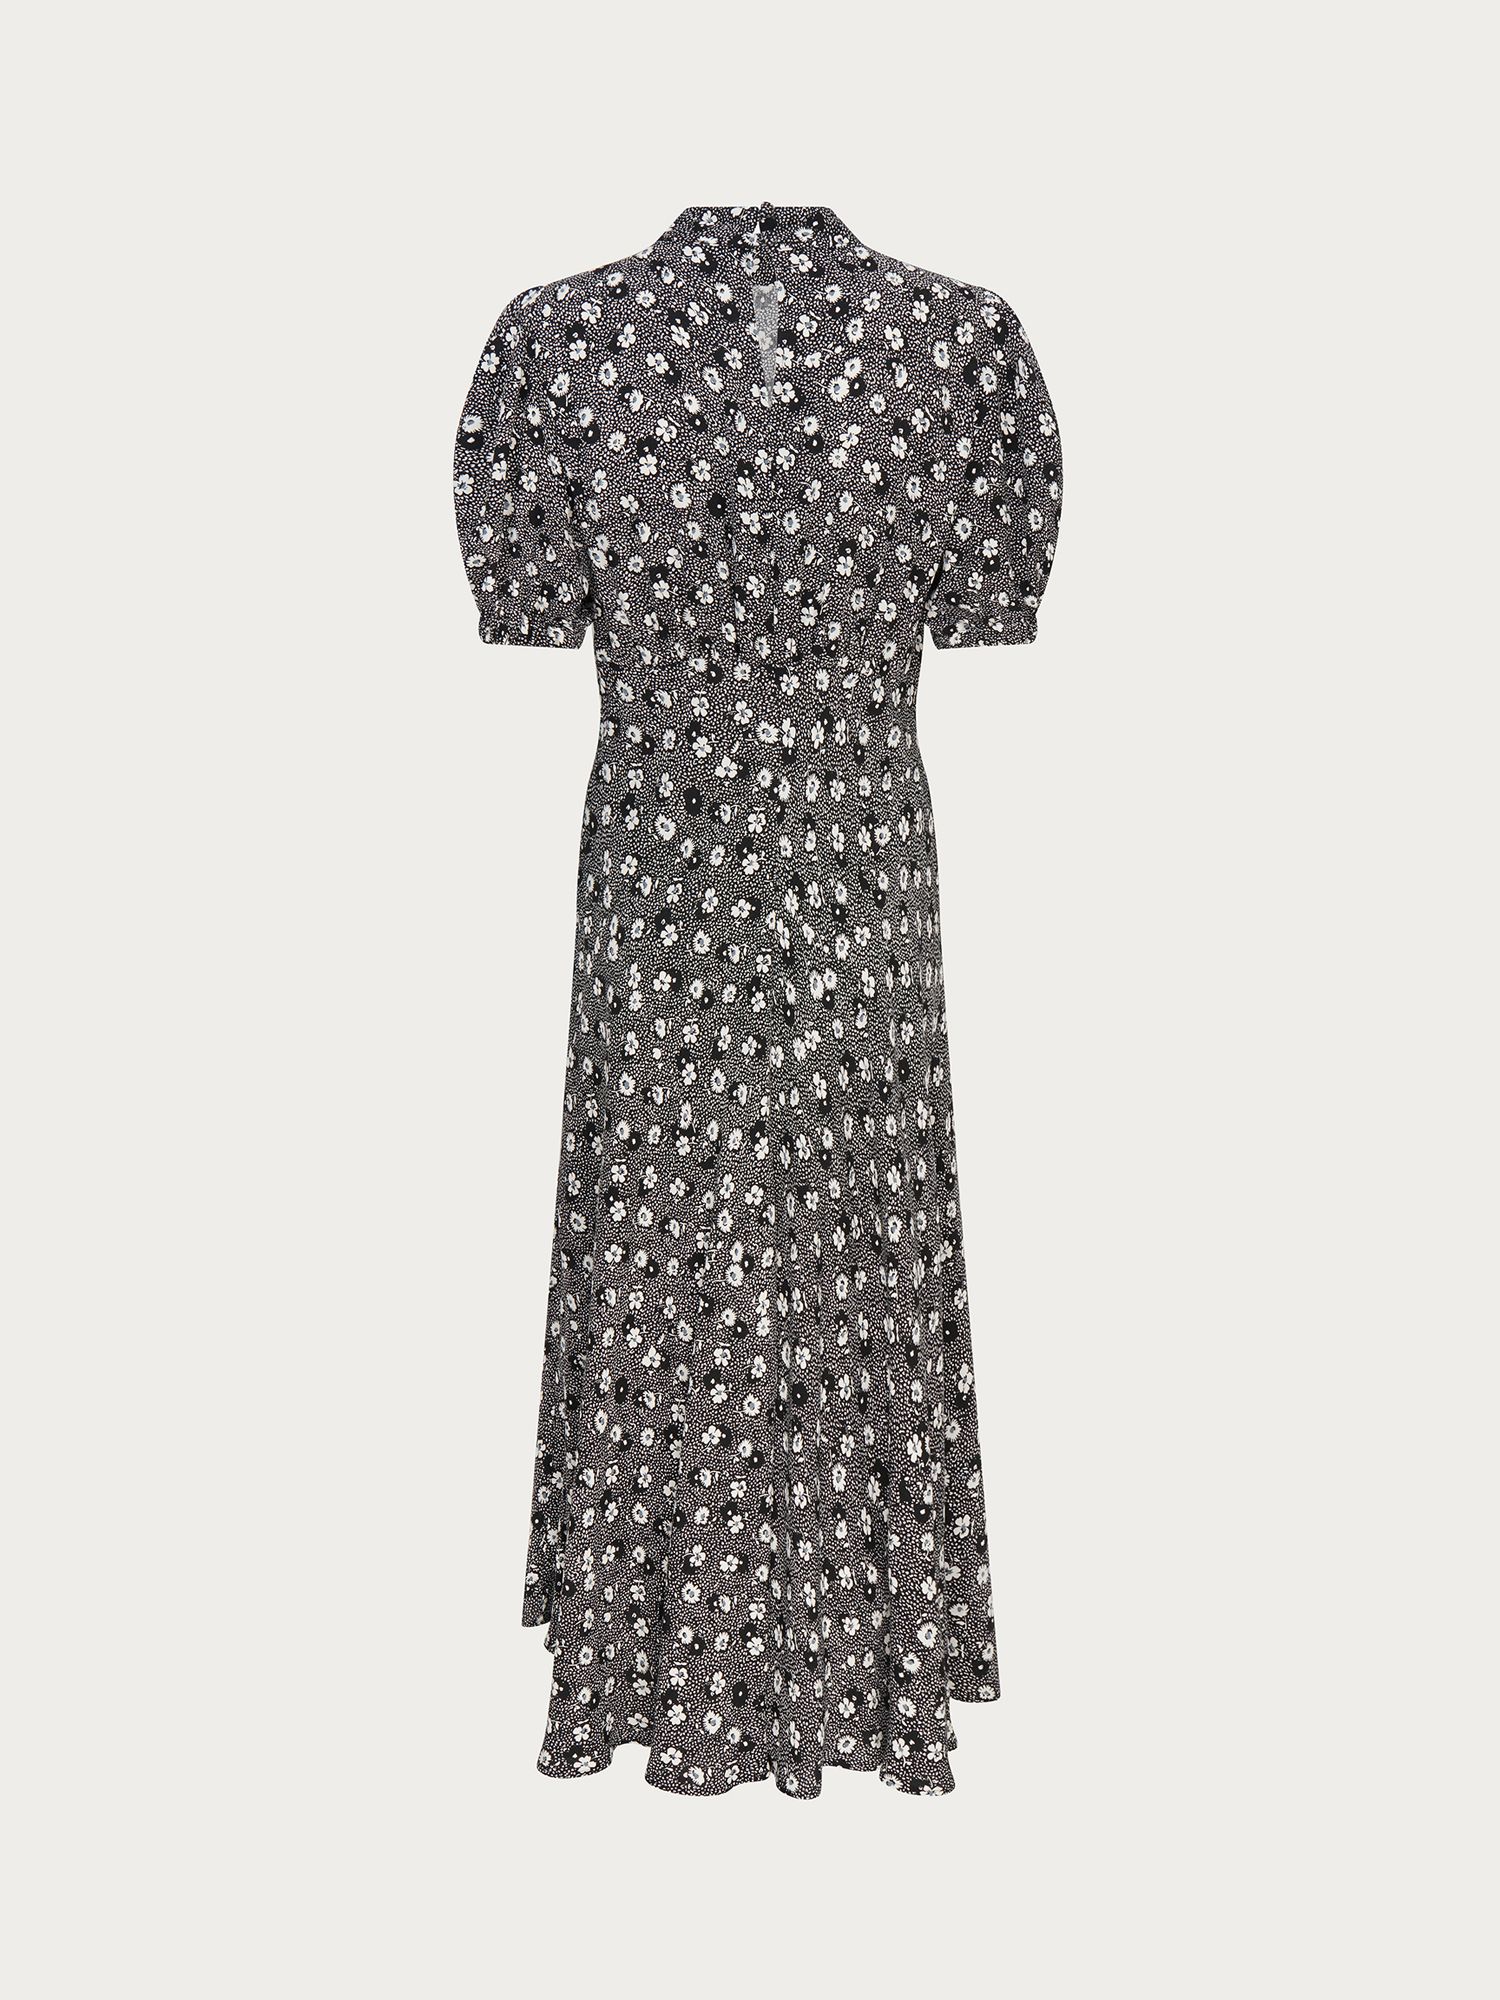 Ghost Luella Dress, Black at John Lewis & Partners